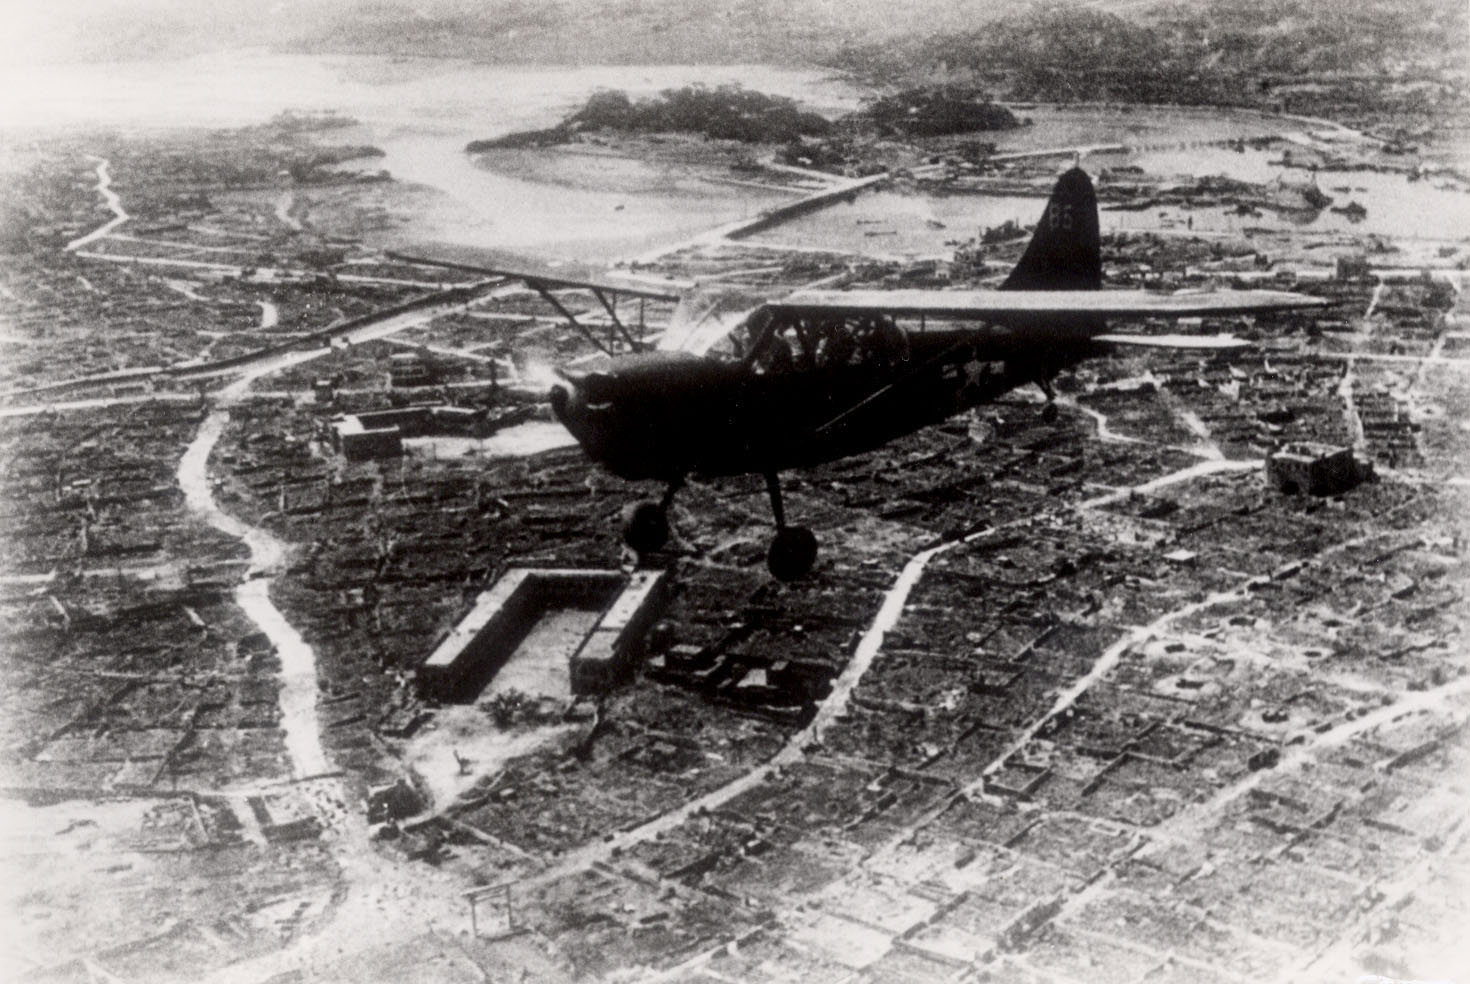 An American plane conducting an air raid on Naha. ©Naha City Museum of History